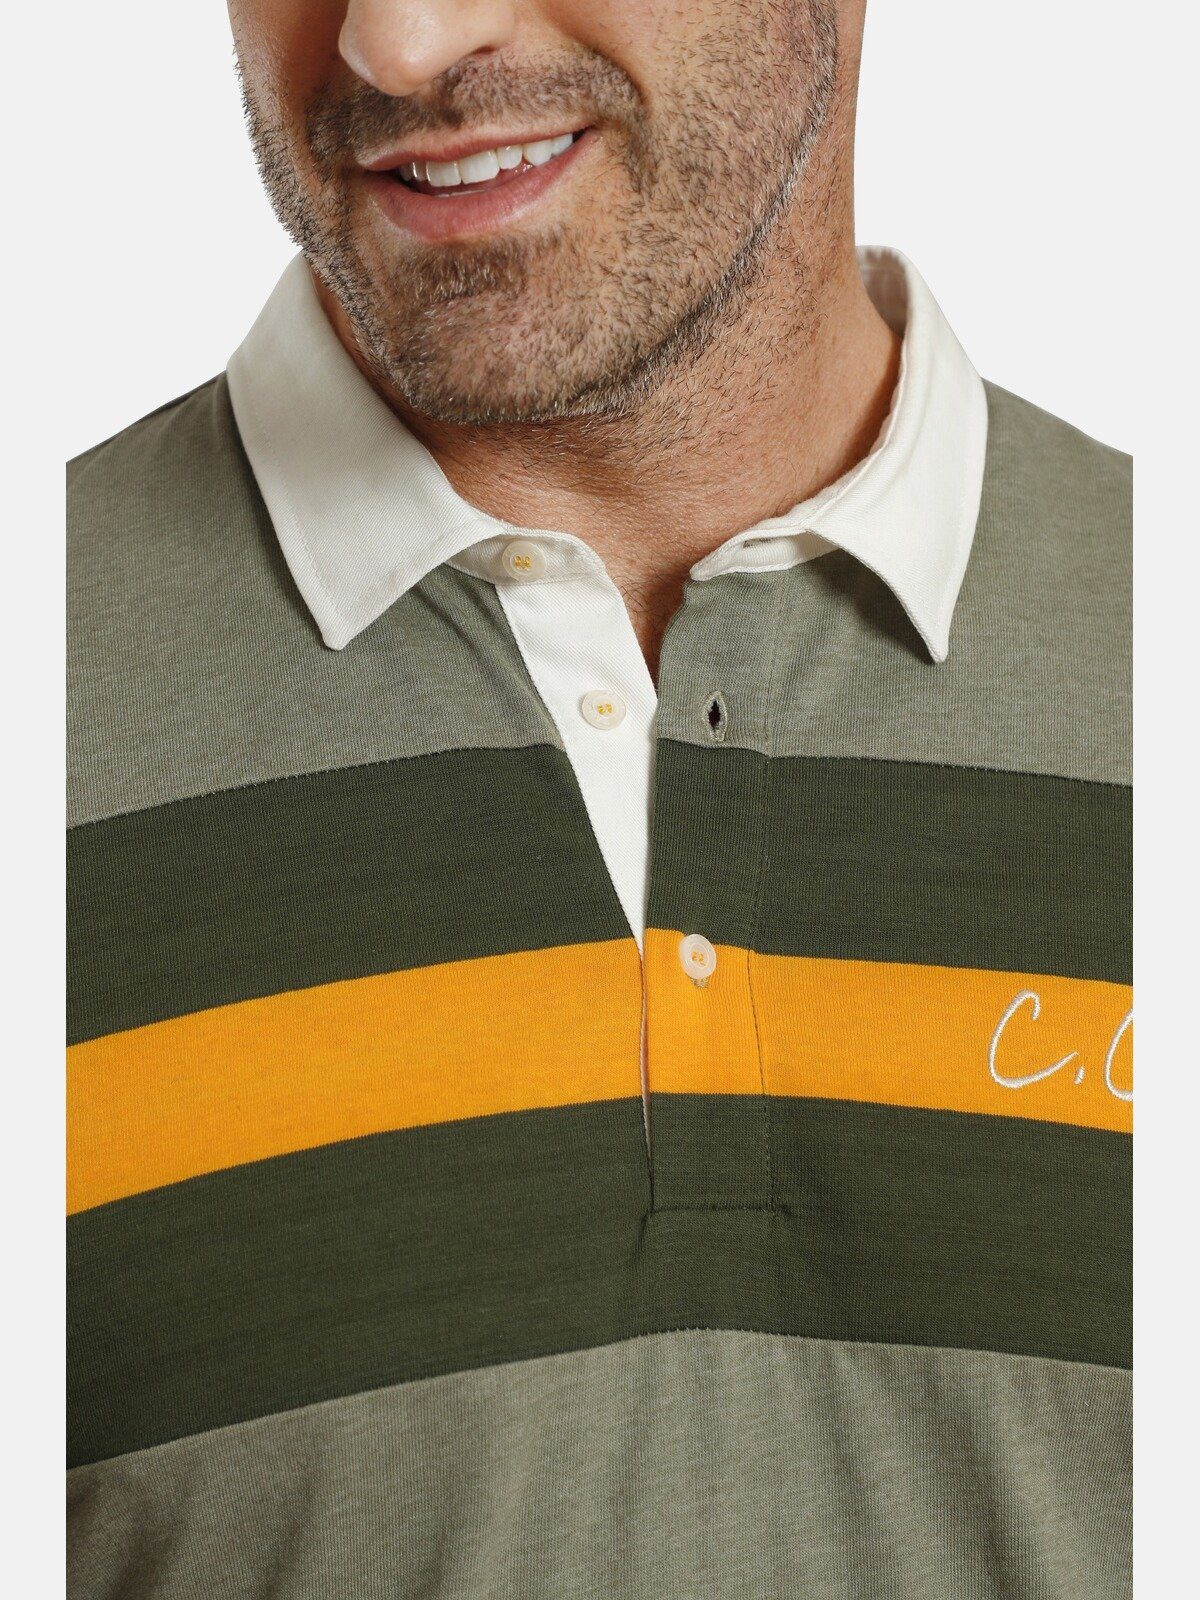 stylisch in Sweatshirt Colby EARL Colour-Blocking GARWY Charles